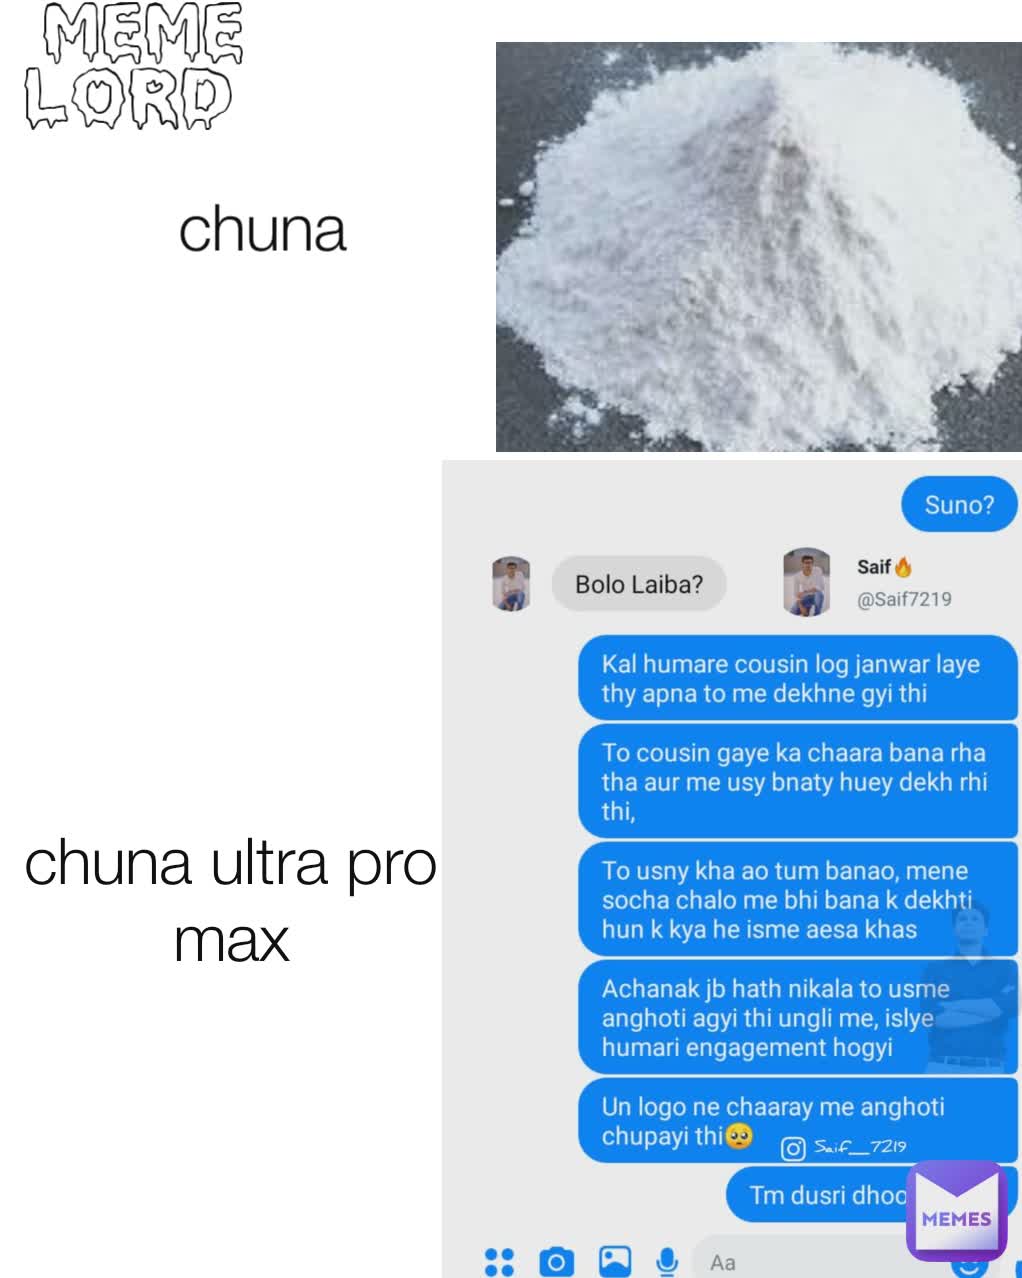 chuna  chuna ultra pro max meme lord 